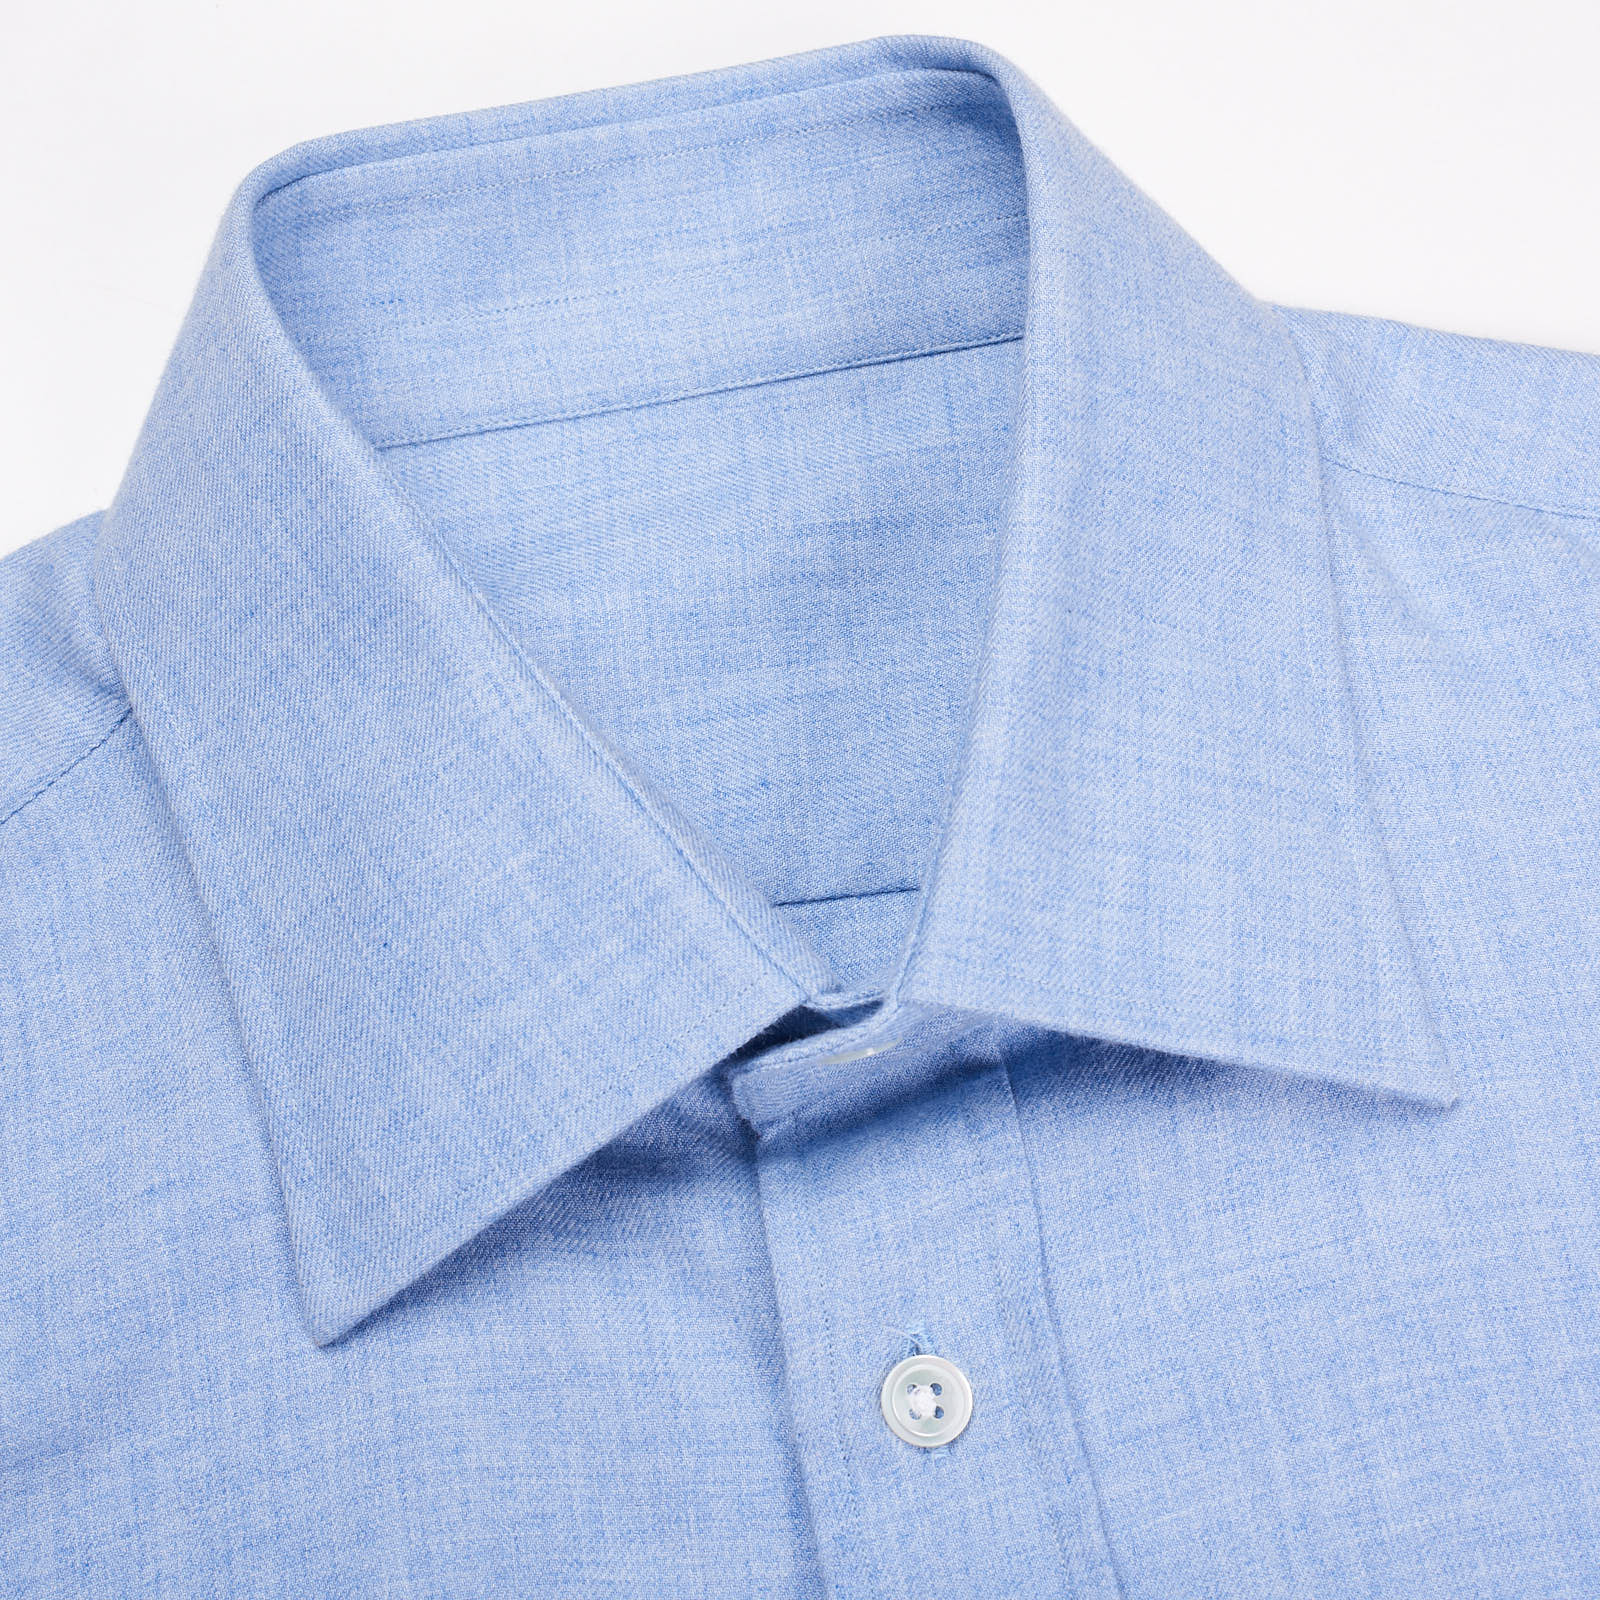 ANDERSON & SHEPPARD Handmade Blue Cotton-Cashmere Dress Shirt EU 41 US 16 ANDERSON & SHEPPARD